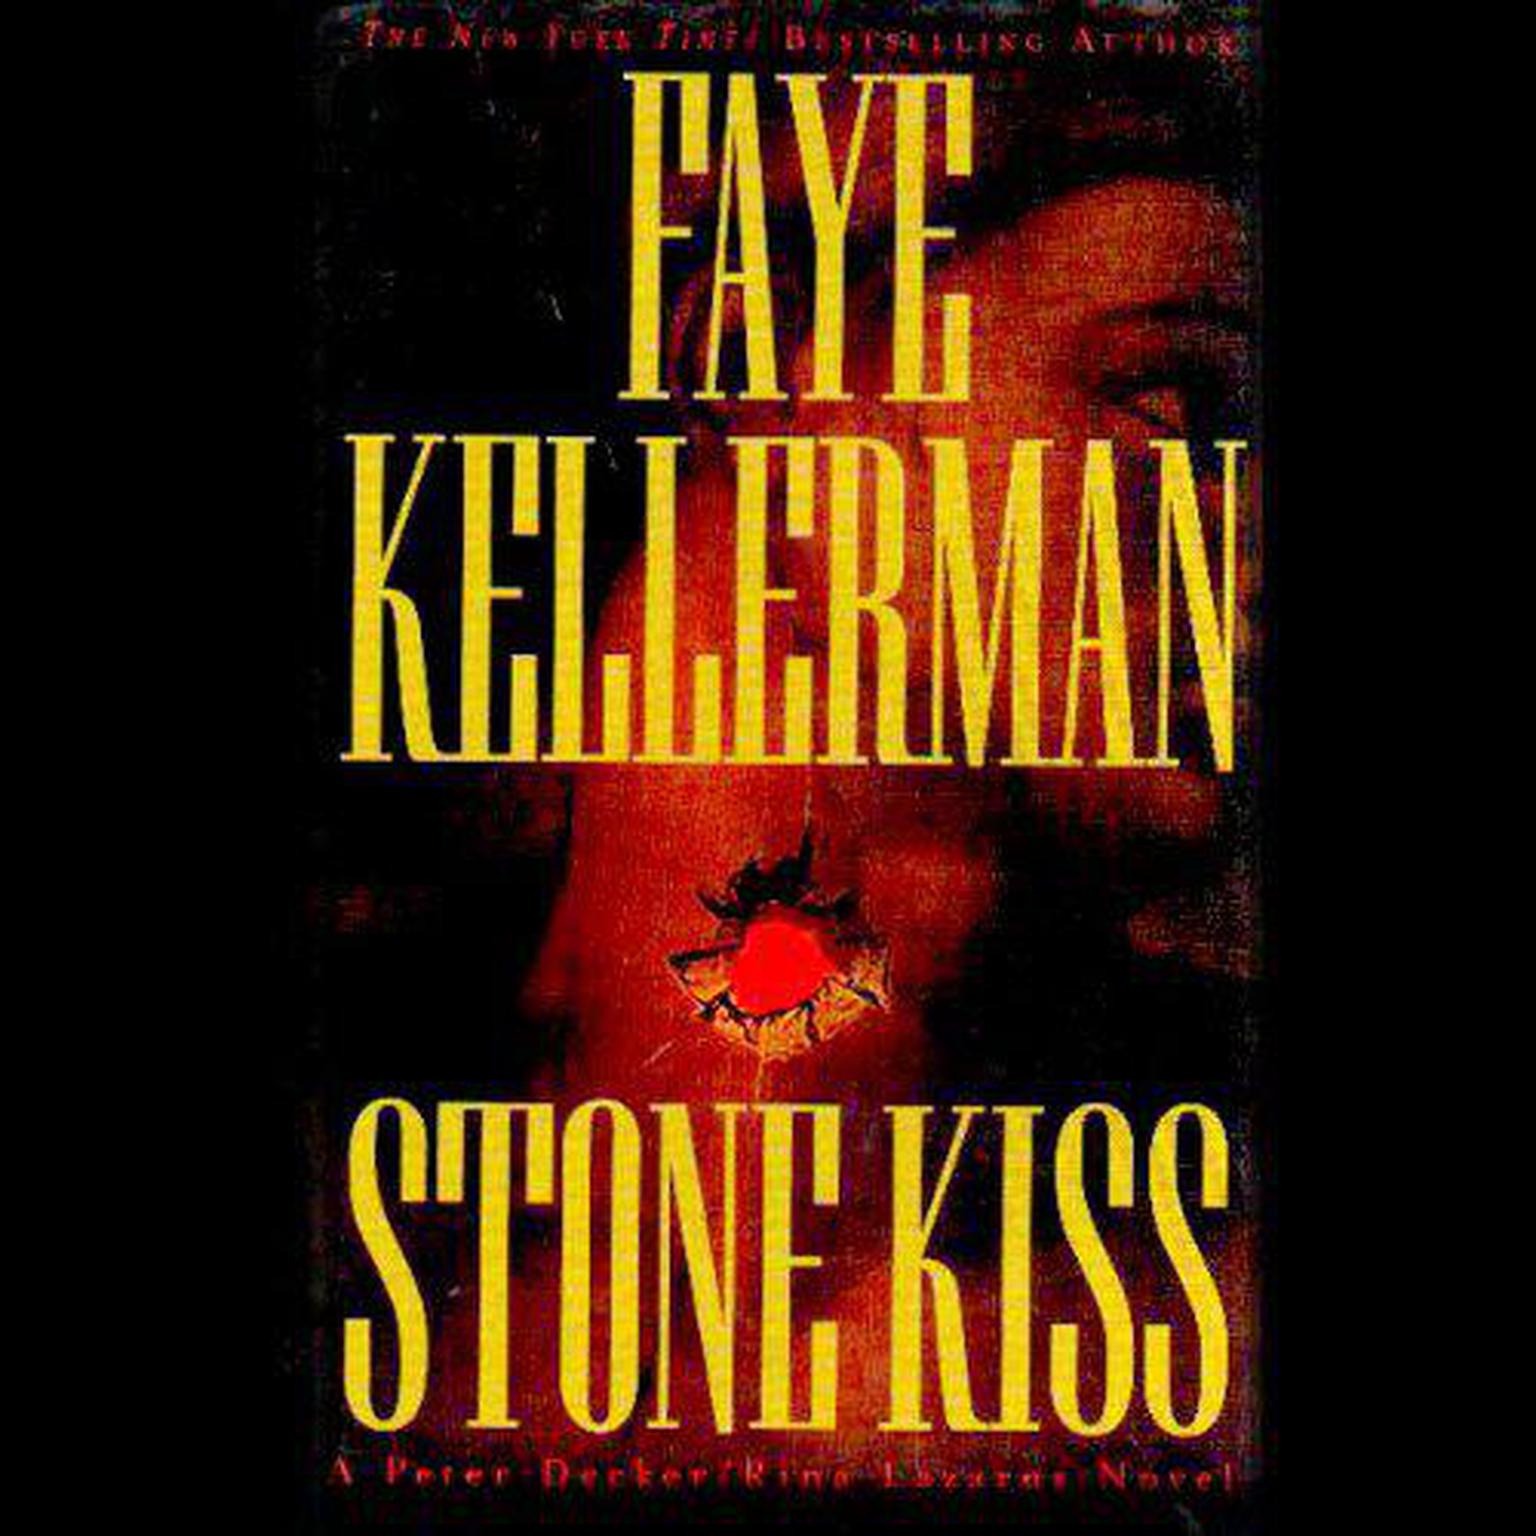 Stone Kiss (Abridged) Audiobook, by Faye Kellerman